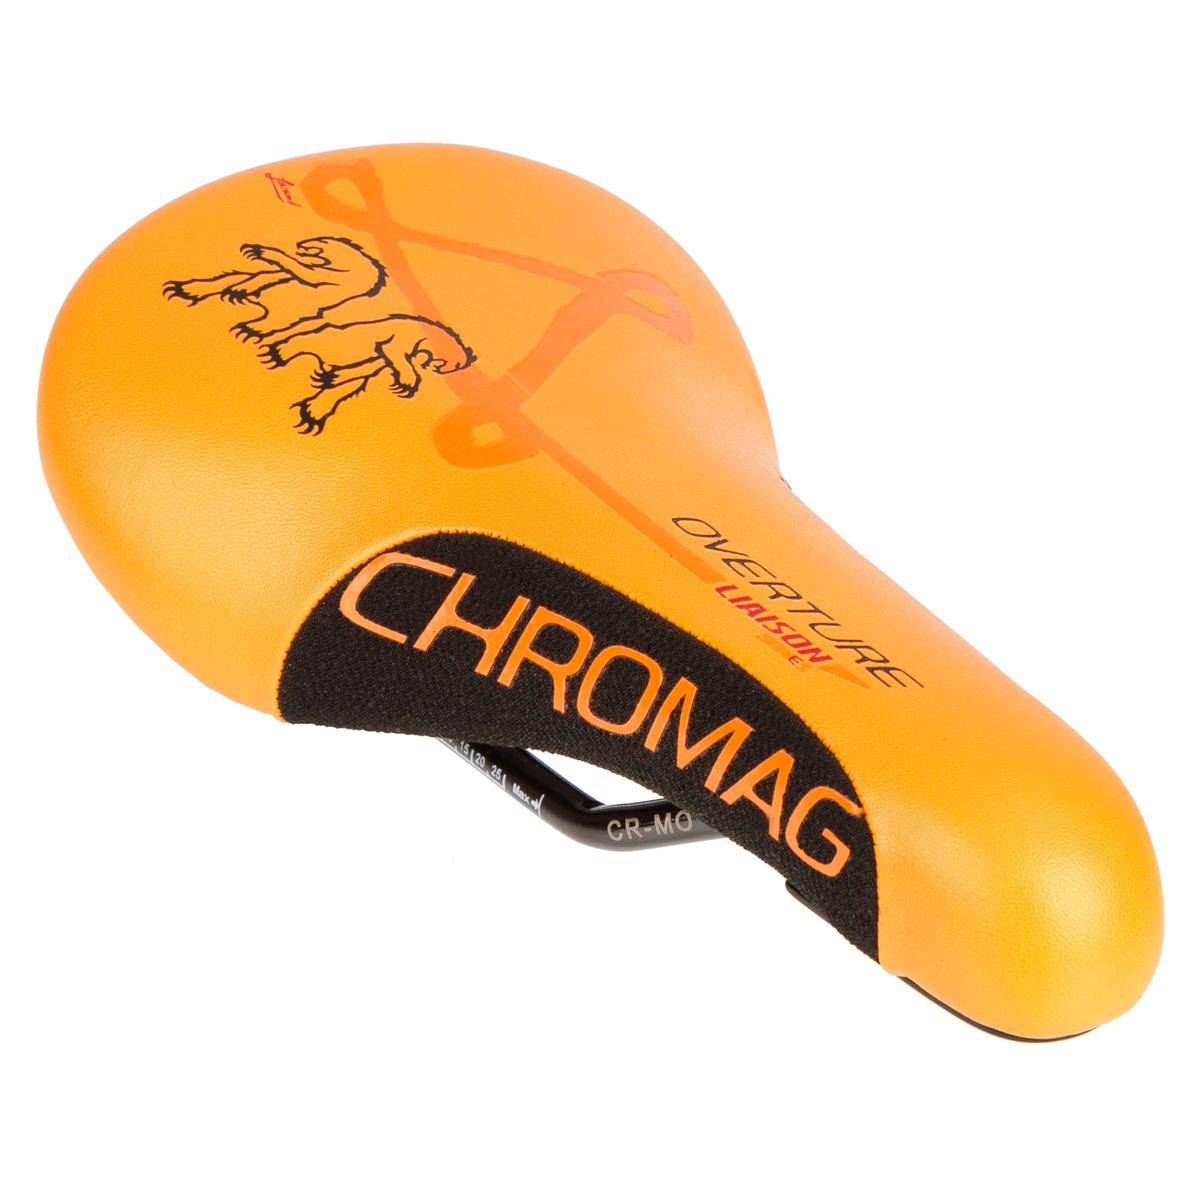 Chromag Sella Overture 2018 243 x 136 mm, Orange